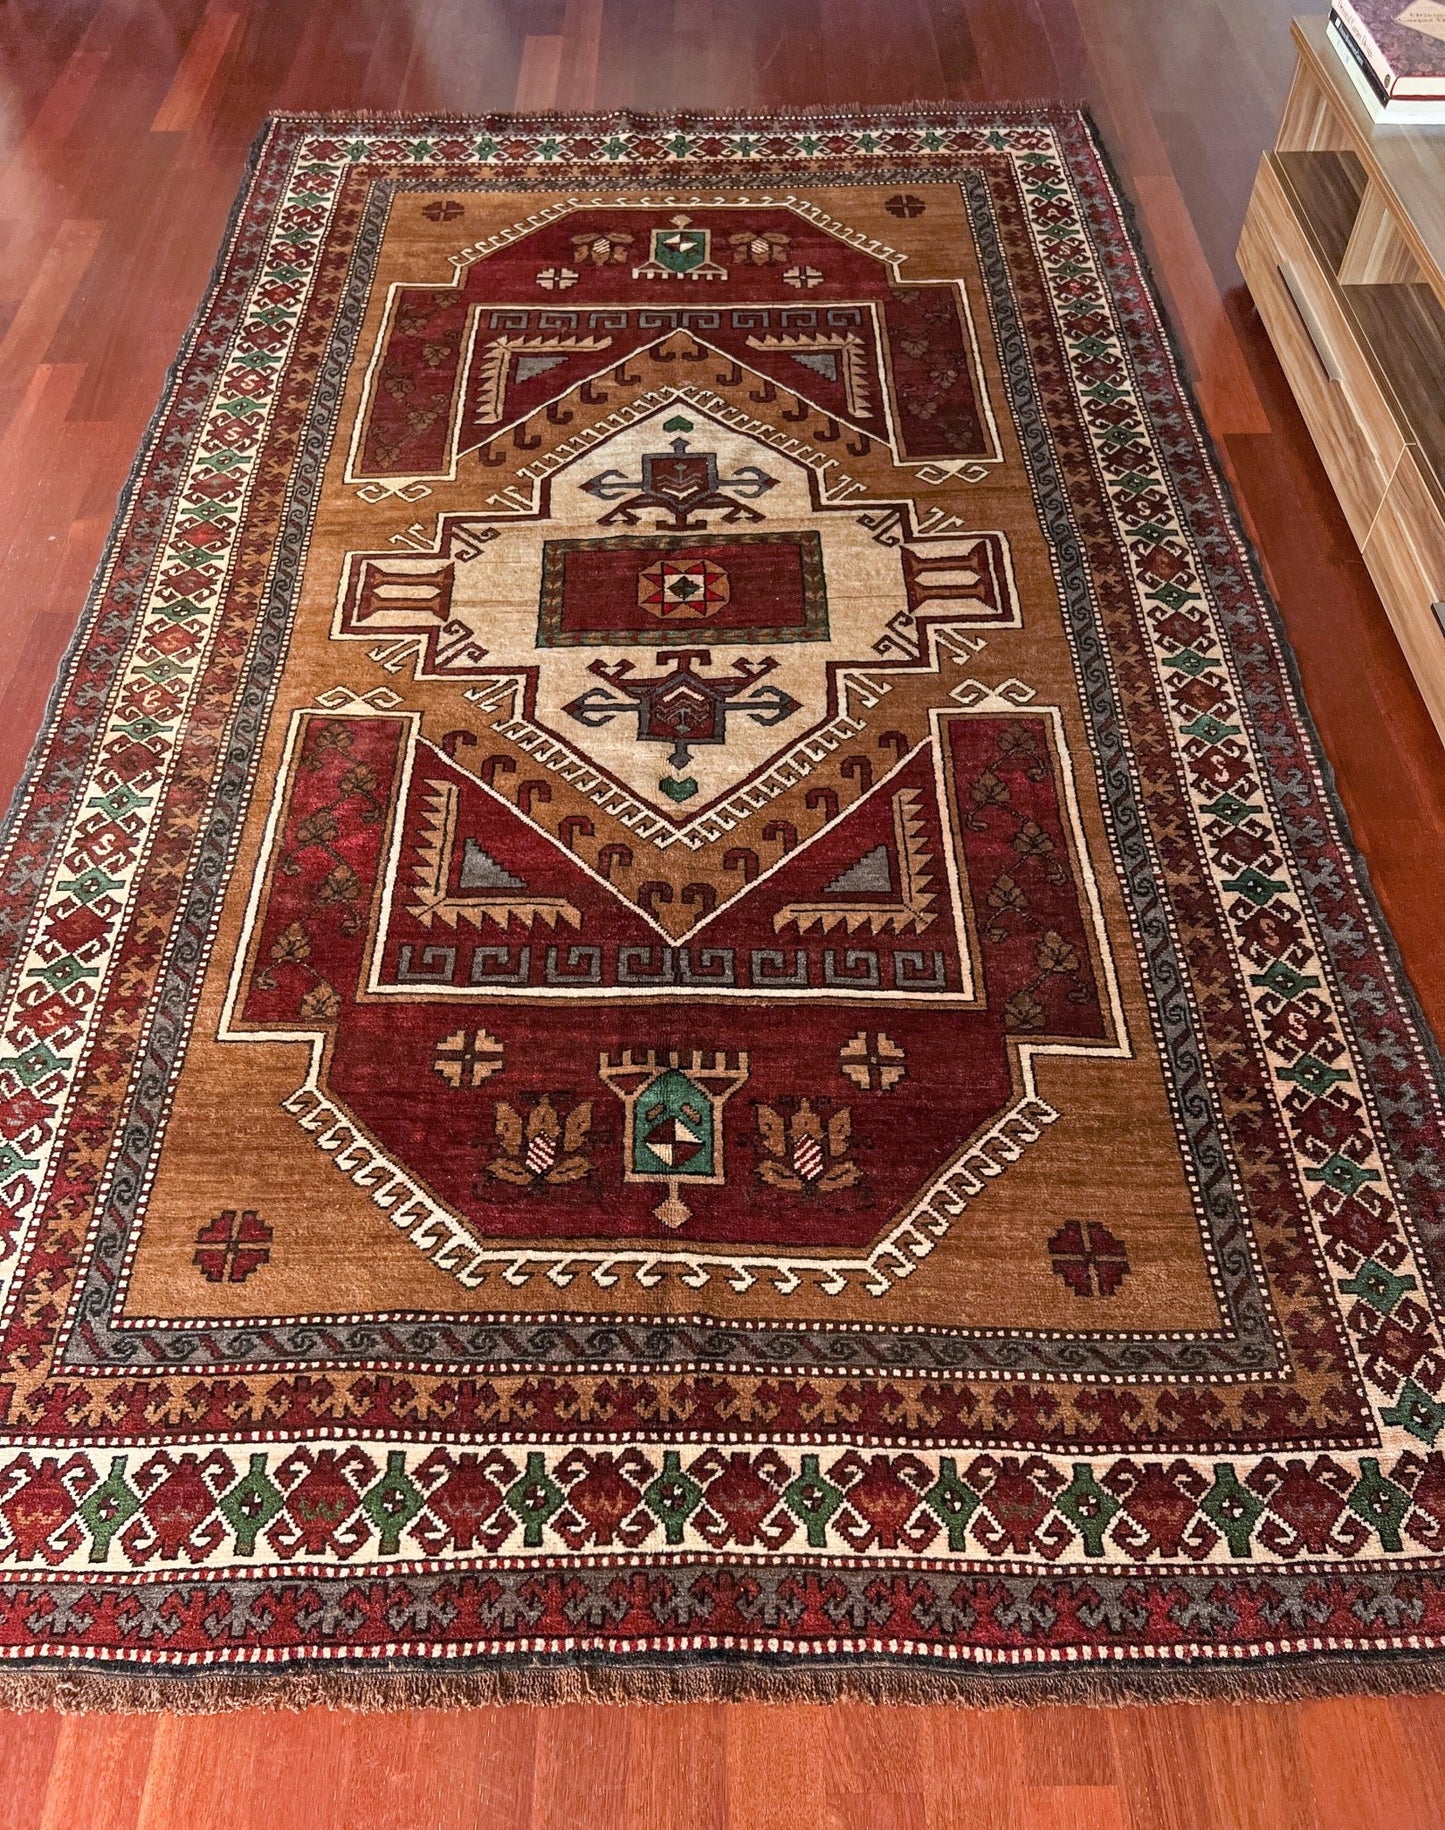 kars turkish rug san francisco bay area oriental rug shop palo alto rug shopping berkeley buy rugs online free shipping